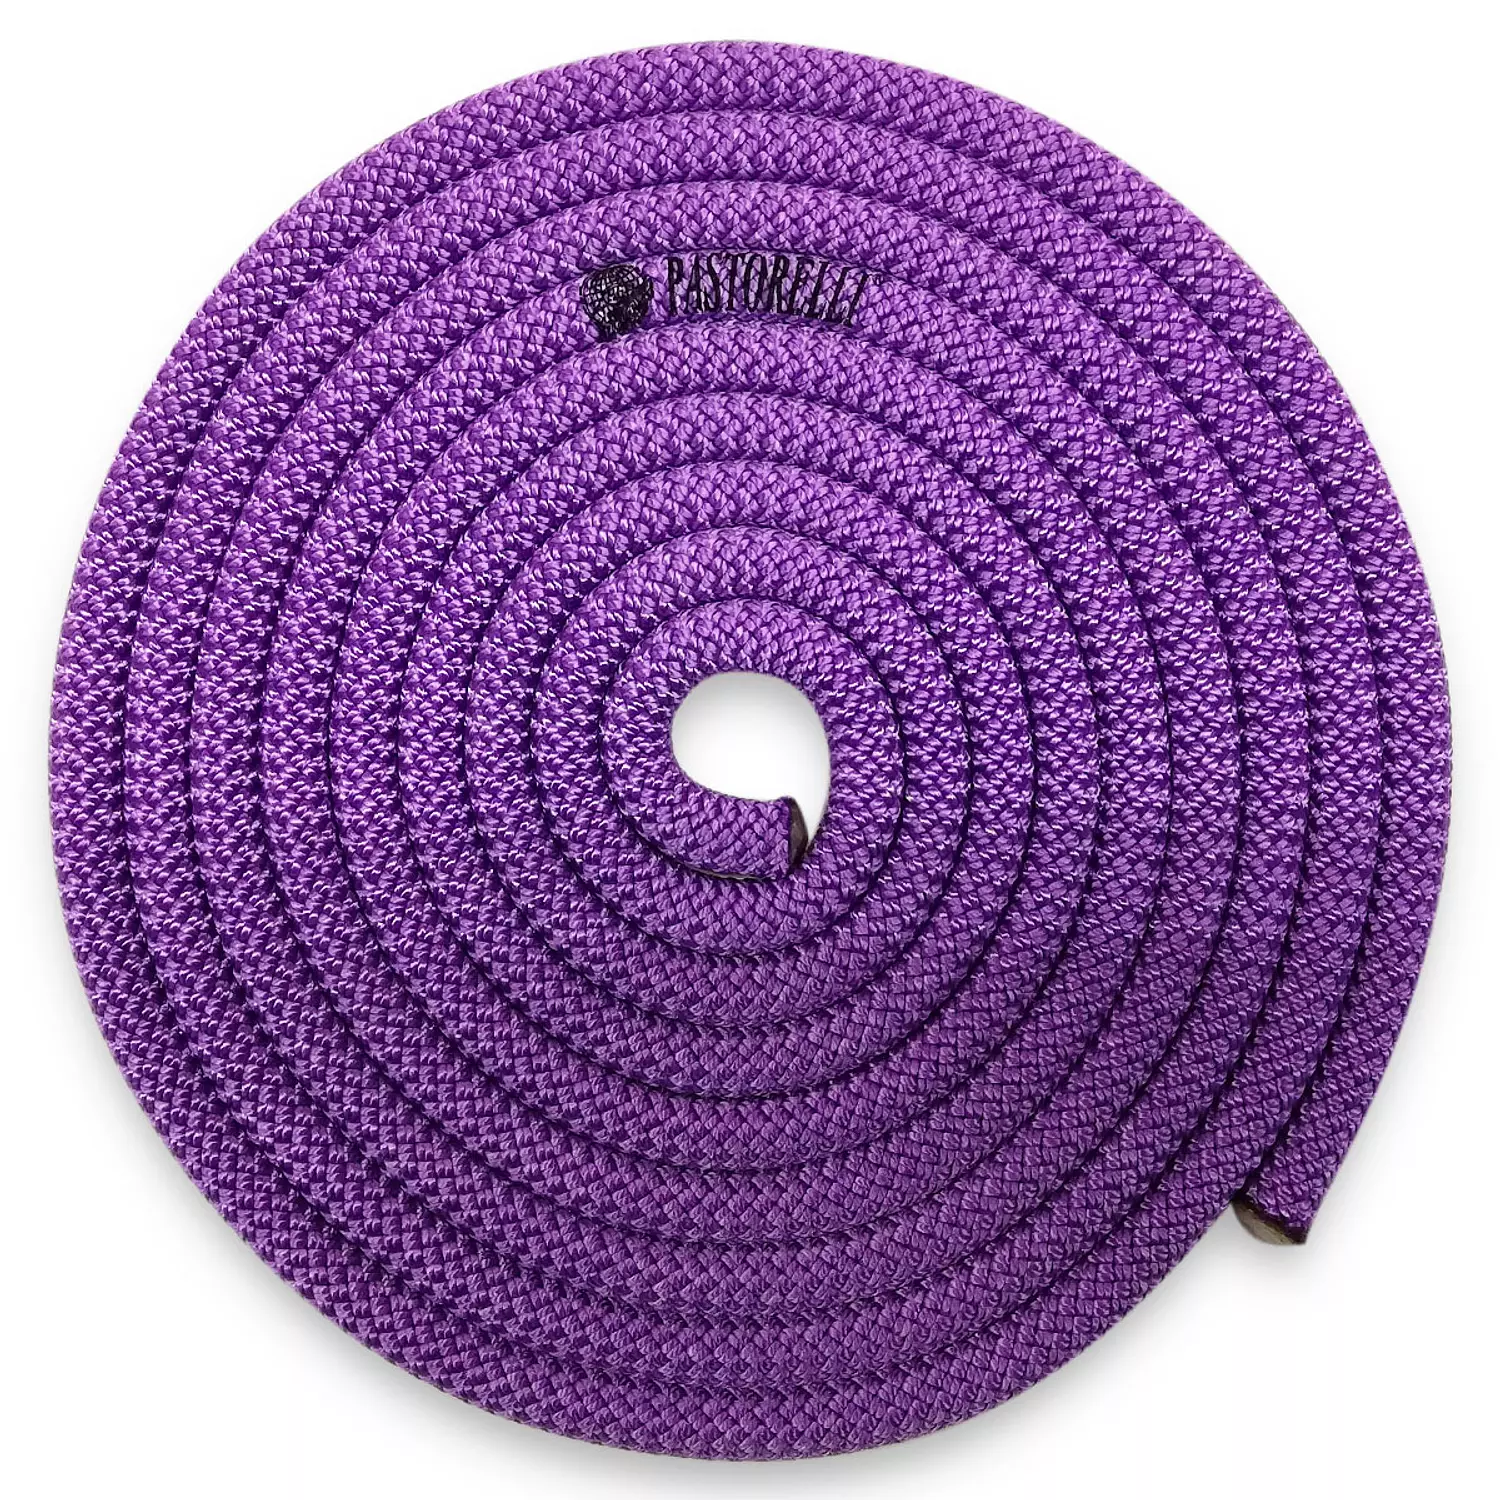 Pastorelli-New Orleans monochromatic rope FIG 3m 5